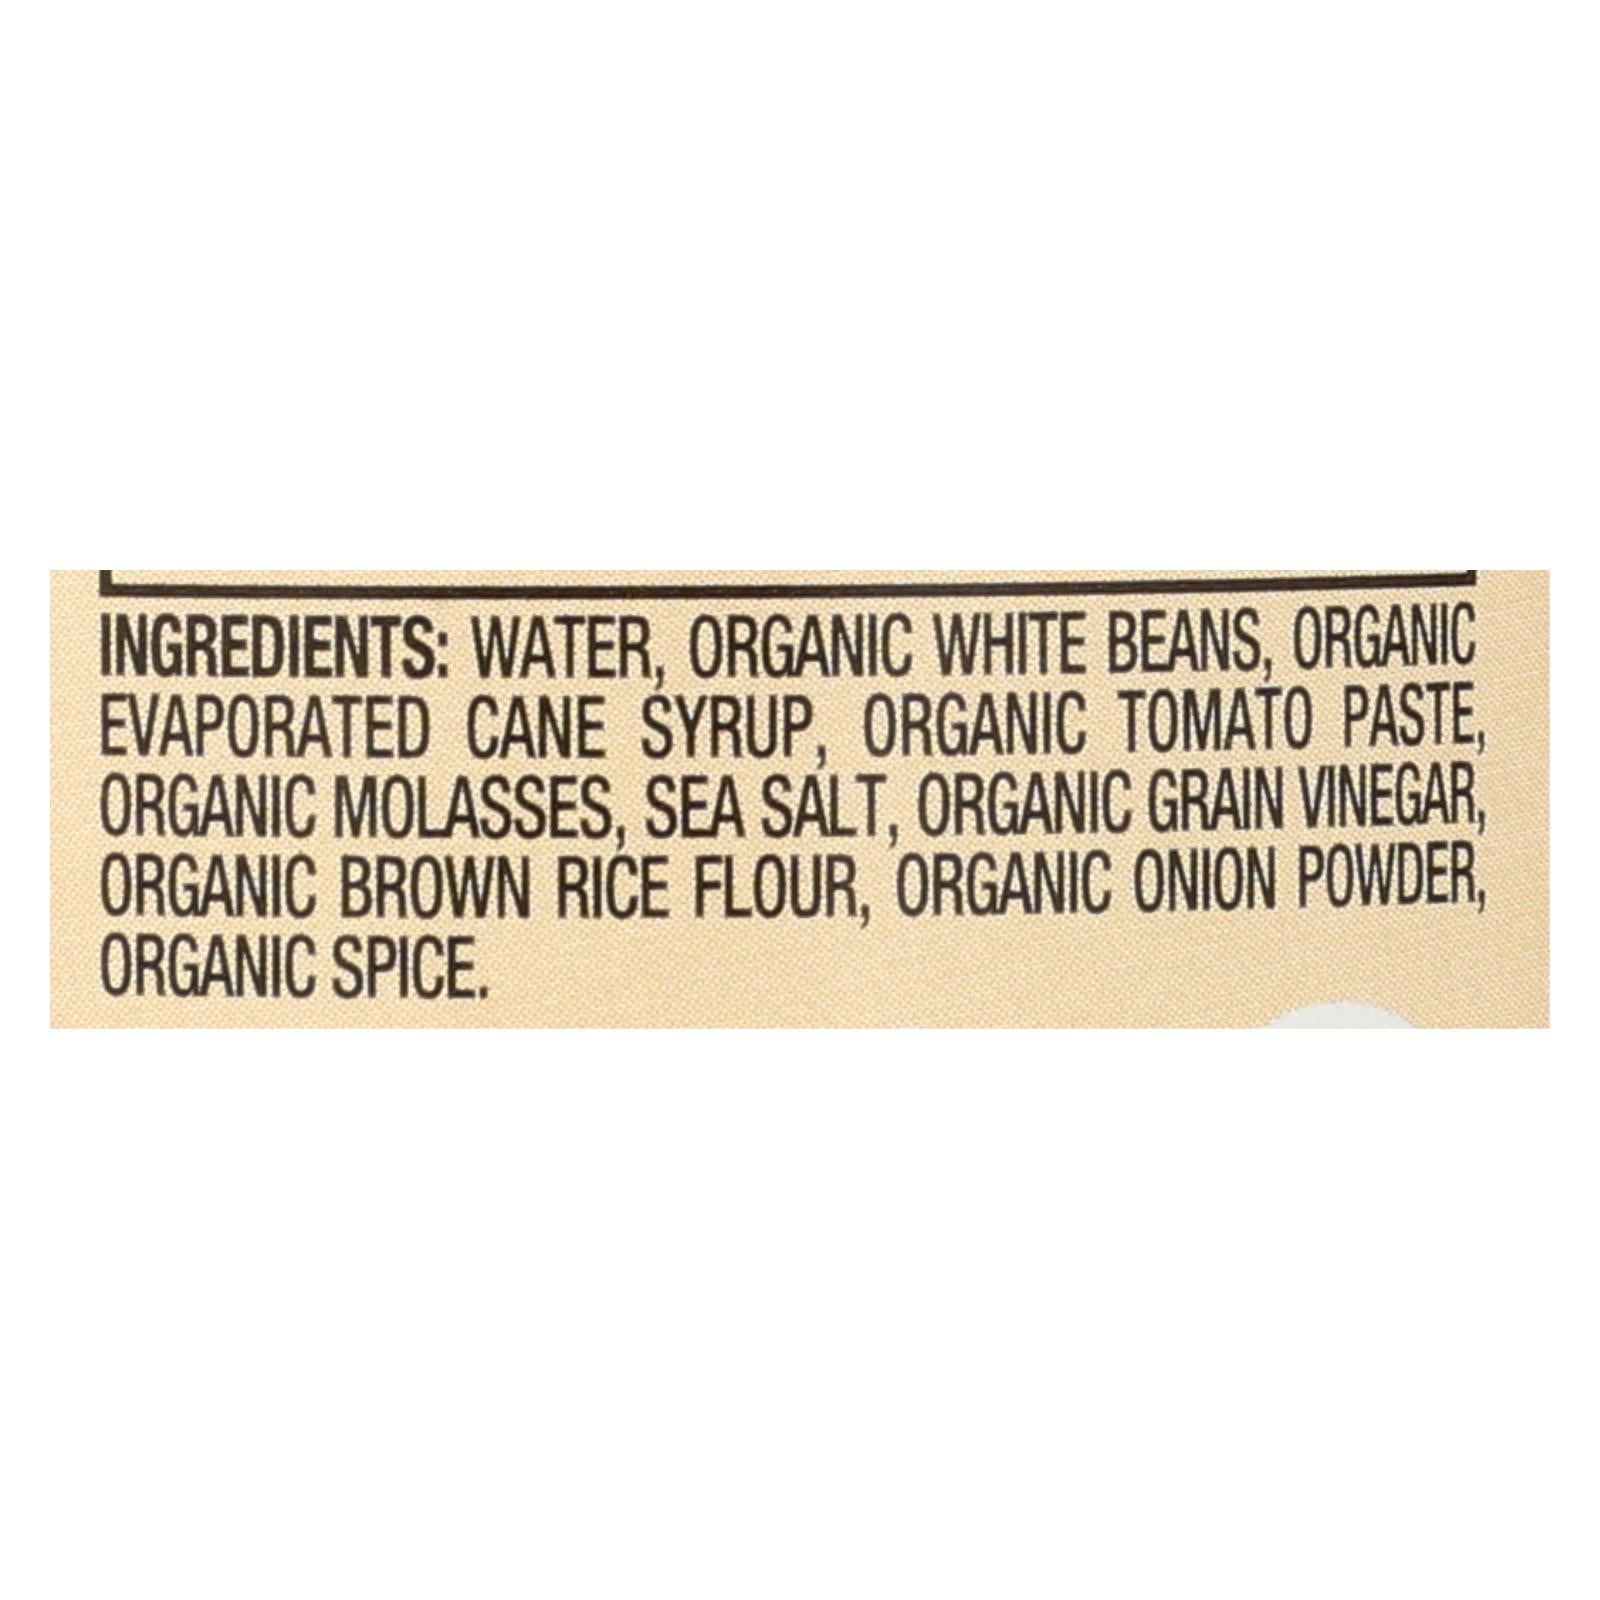 Walnut Acres Organic Baked Beans - Case Of 12 - 15 Oz.